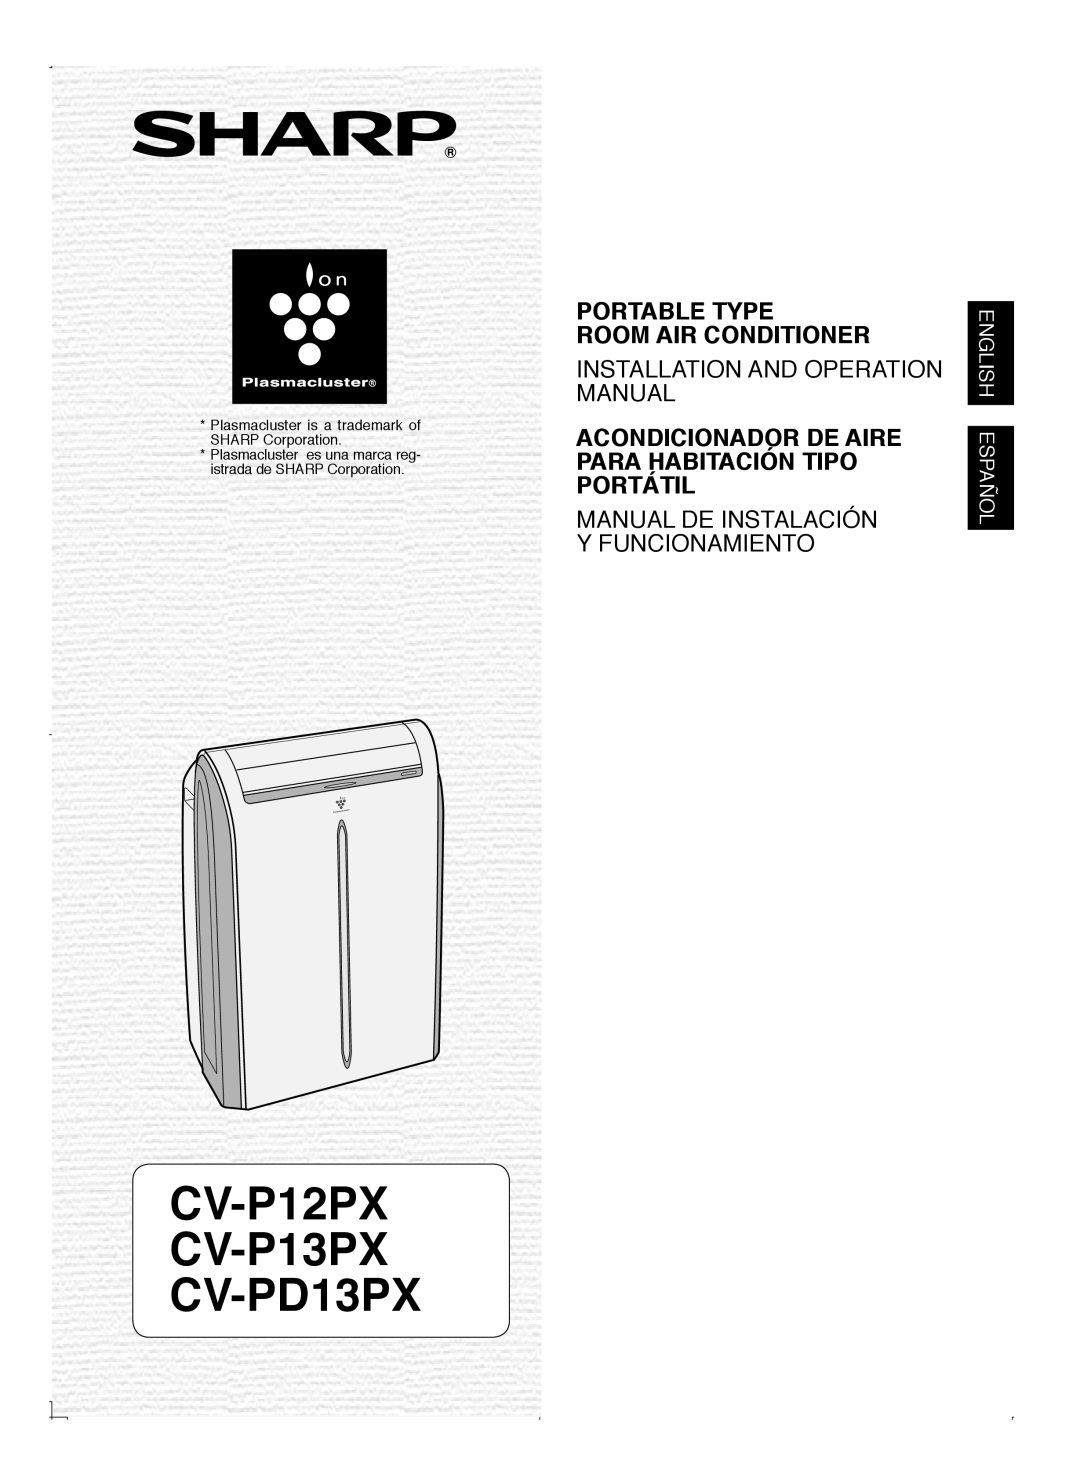 Sony operation manual CV-P12PX CV-P13PX CV-PD13PX, Portable Type Room Air Conditioner, English Español 